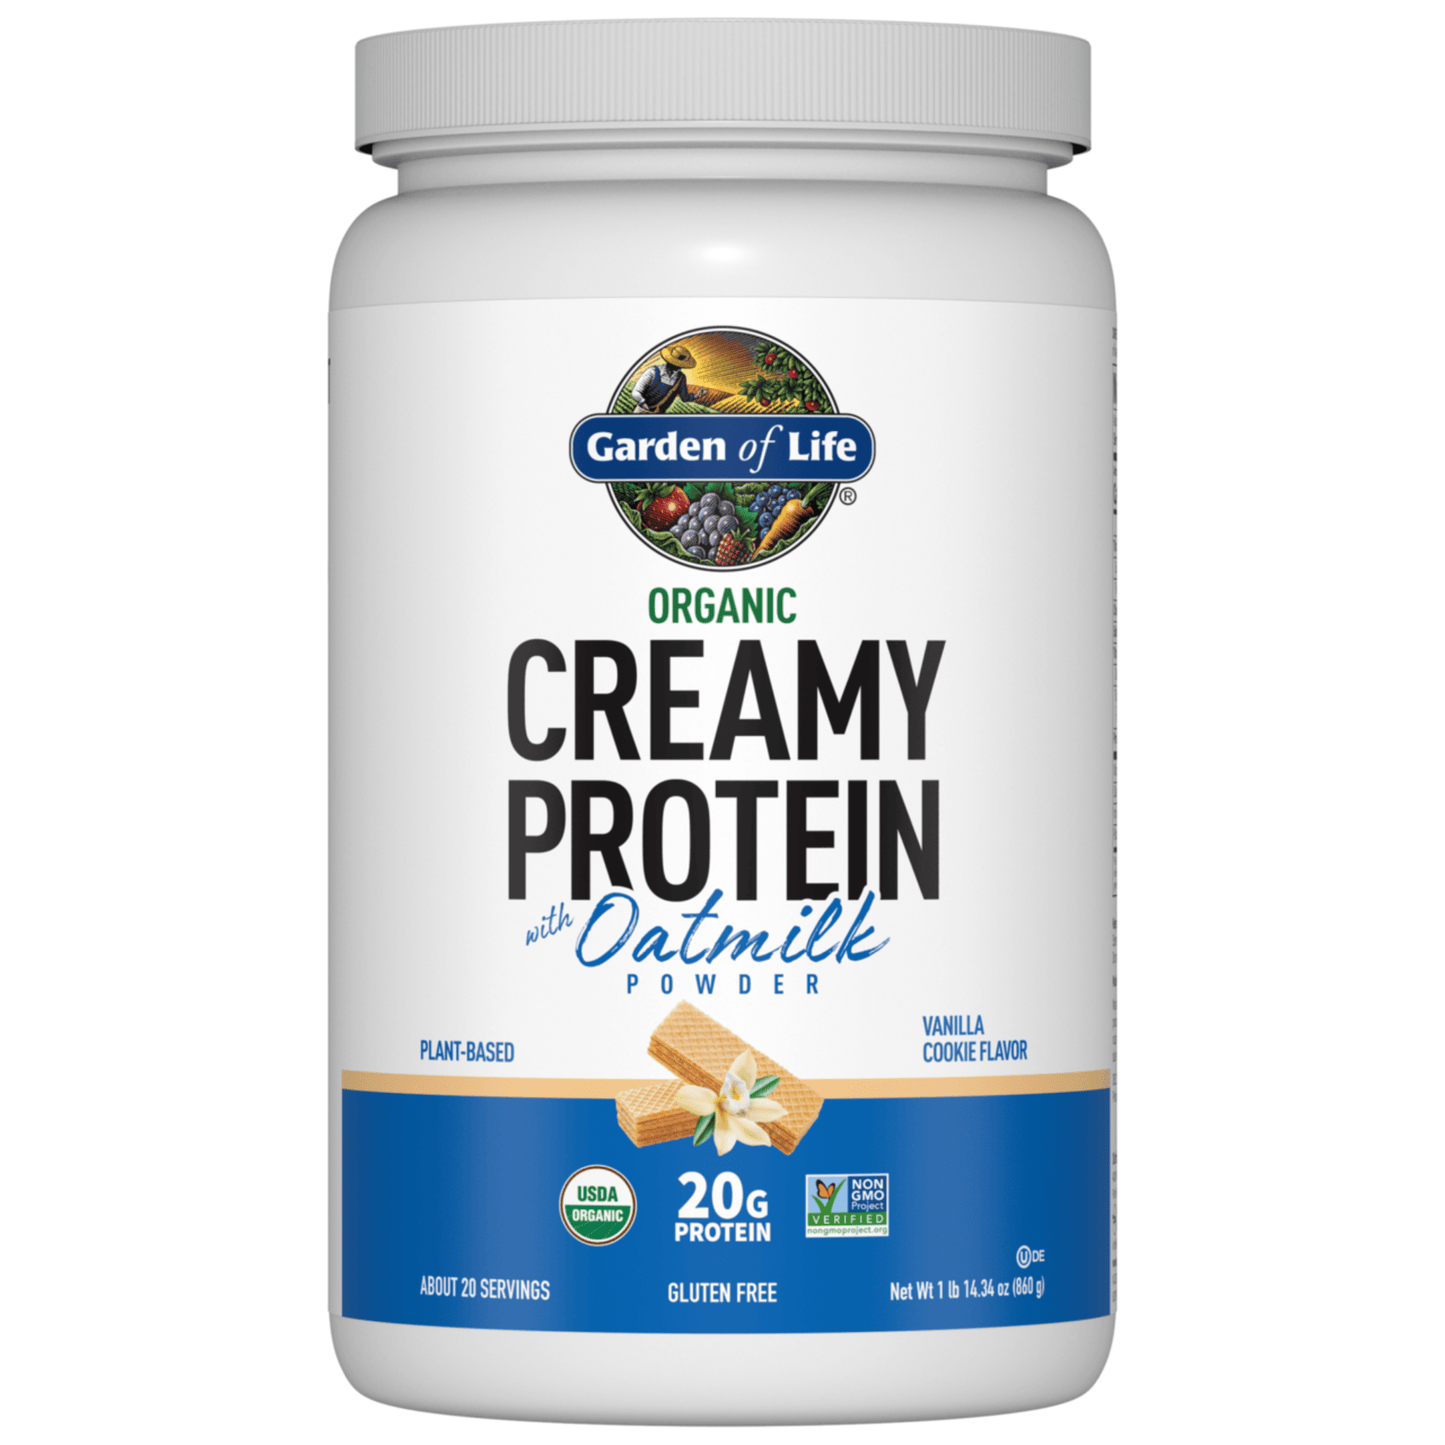 Primary Image of Organic Creamy Protein Powder Vanilla